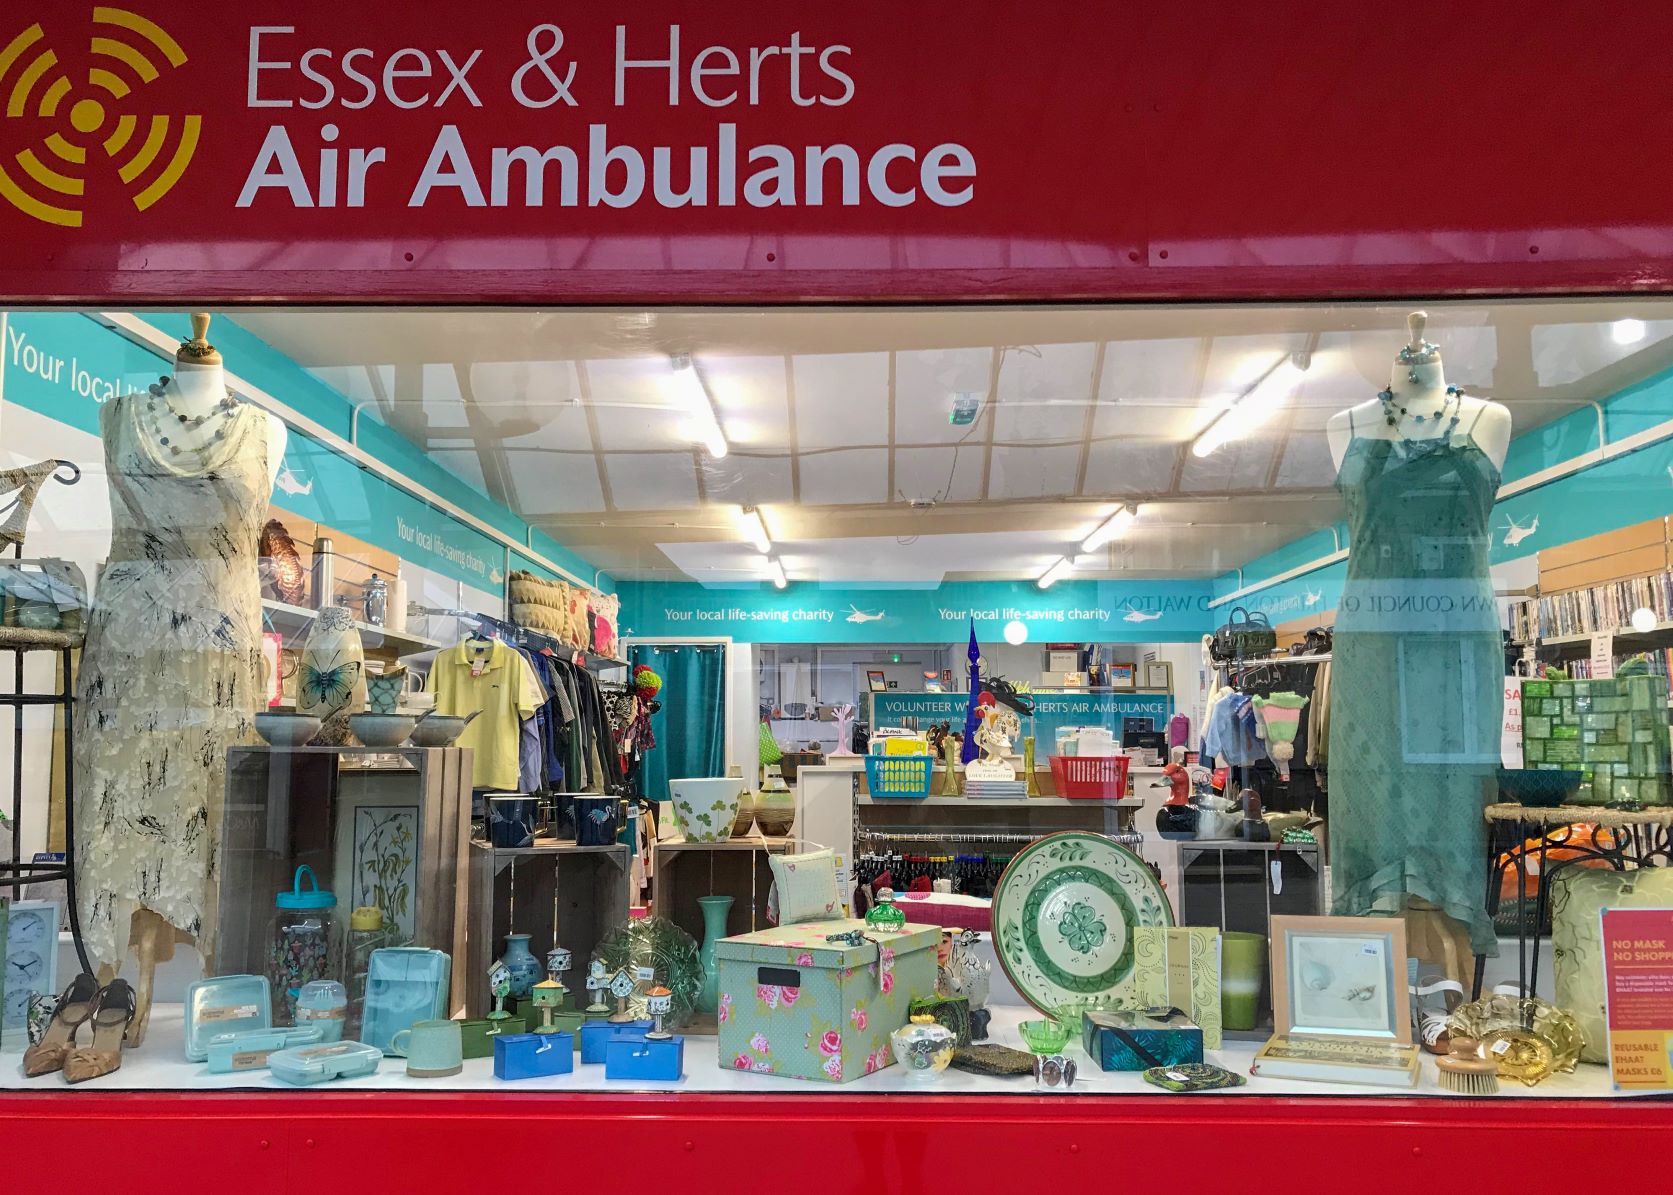 Essex & Herts Air Ambulance says goodbye to Frinton shop